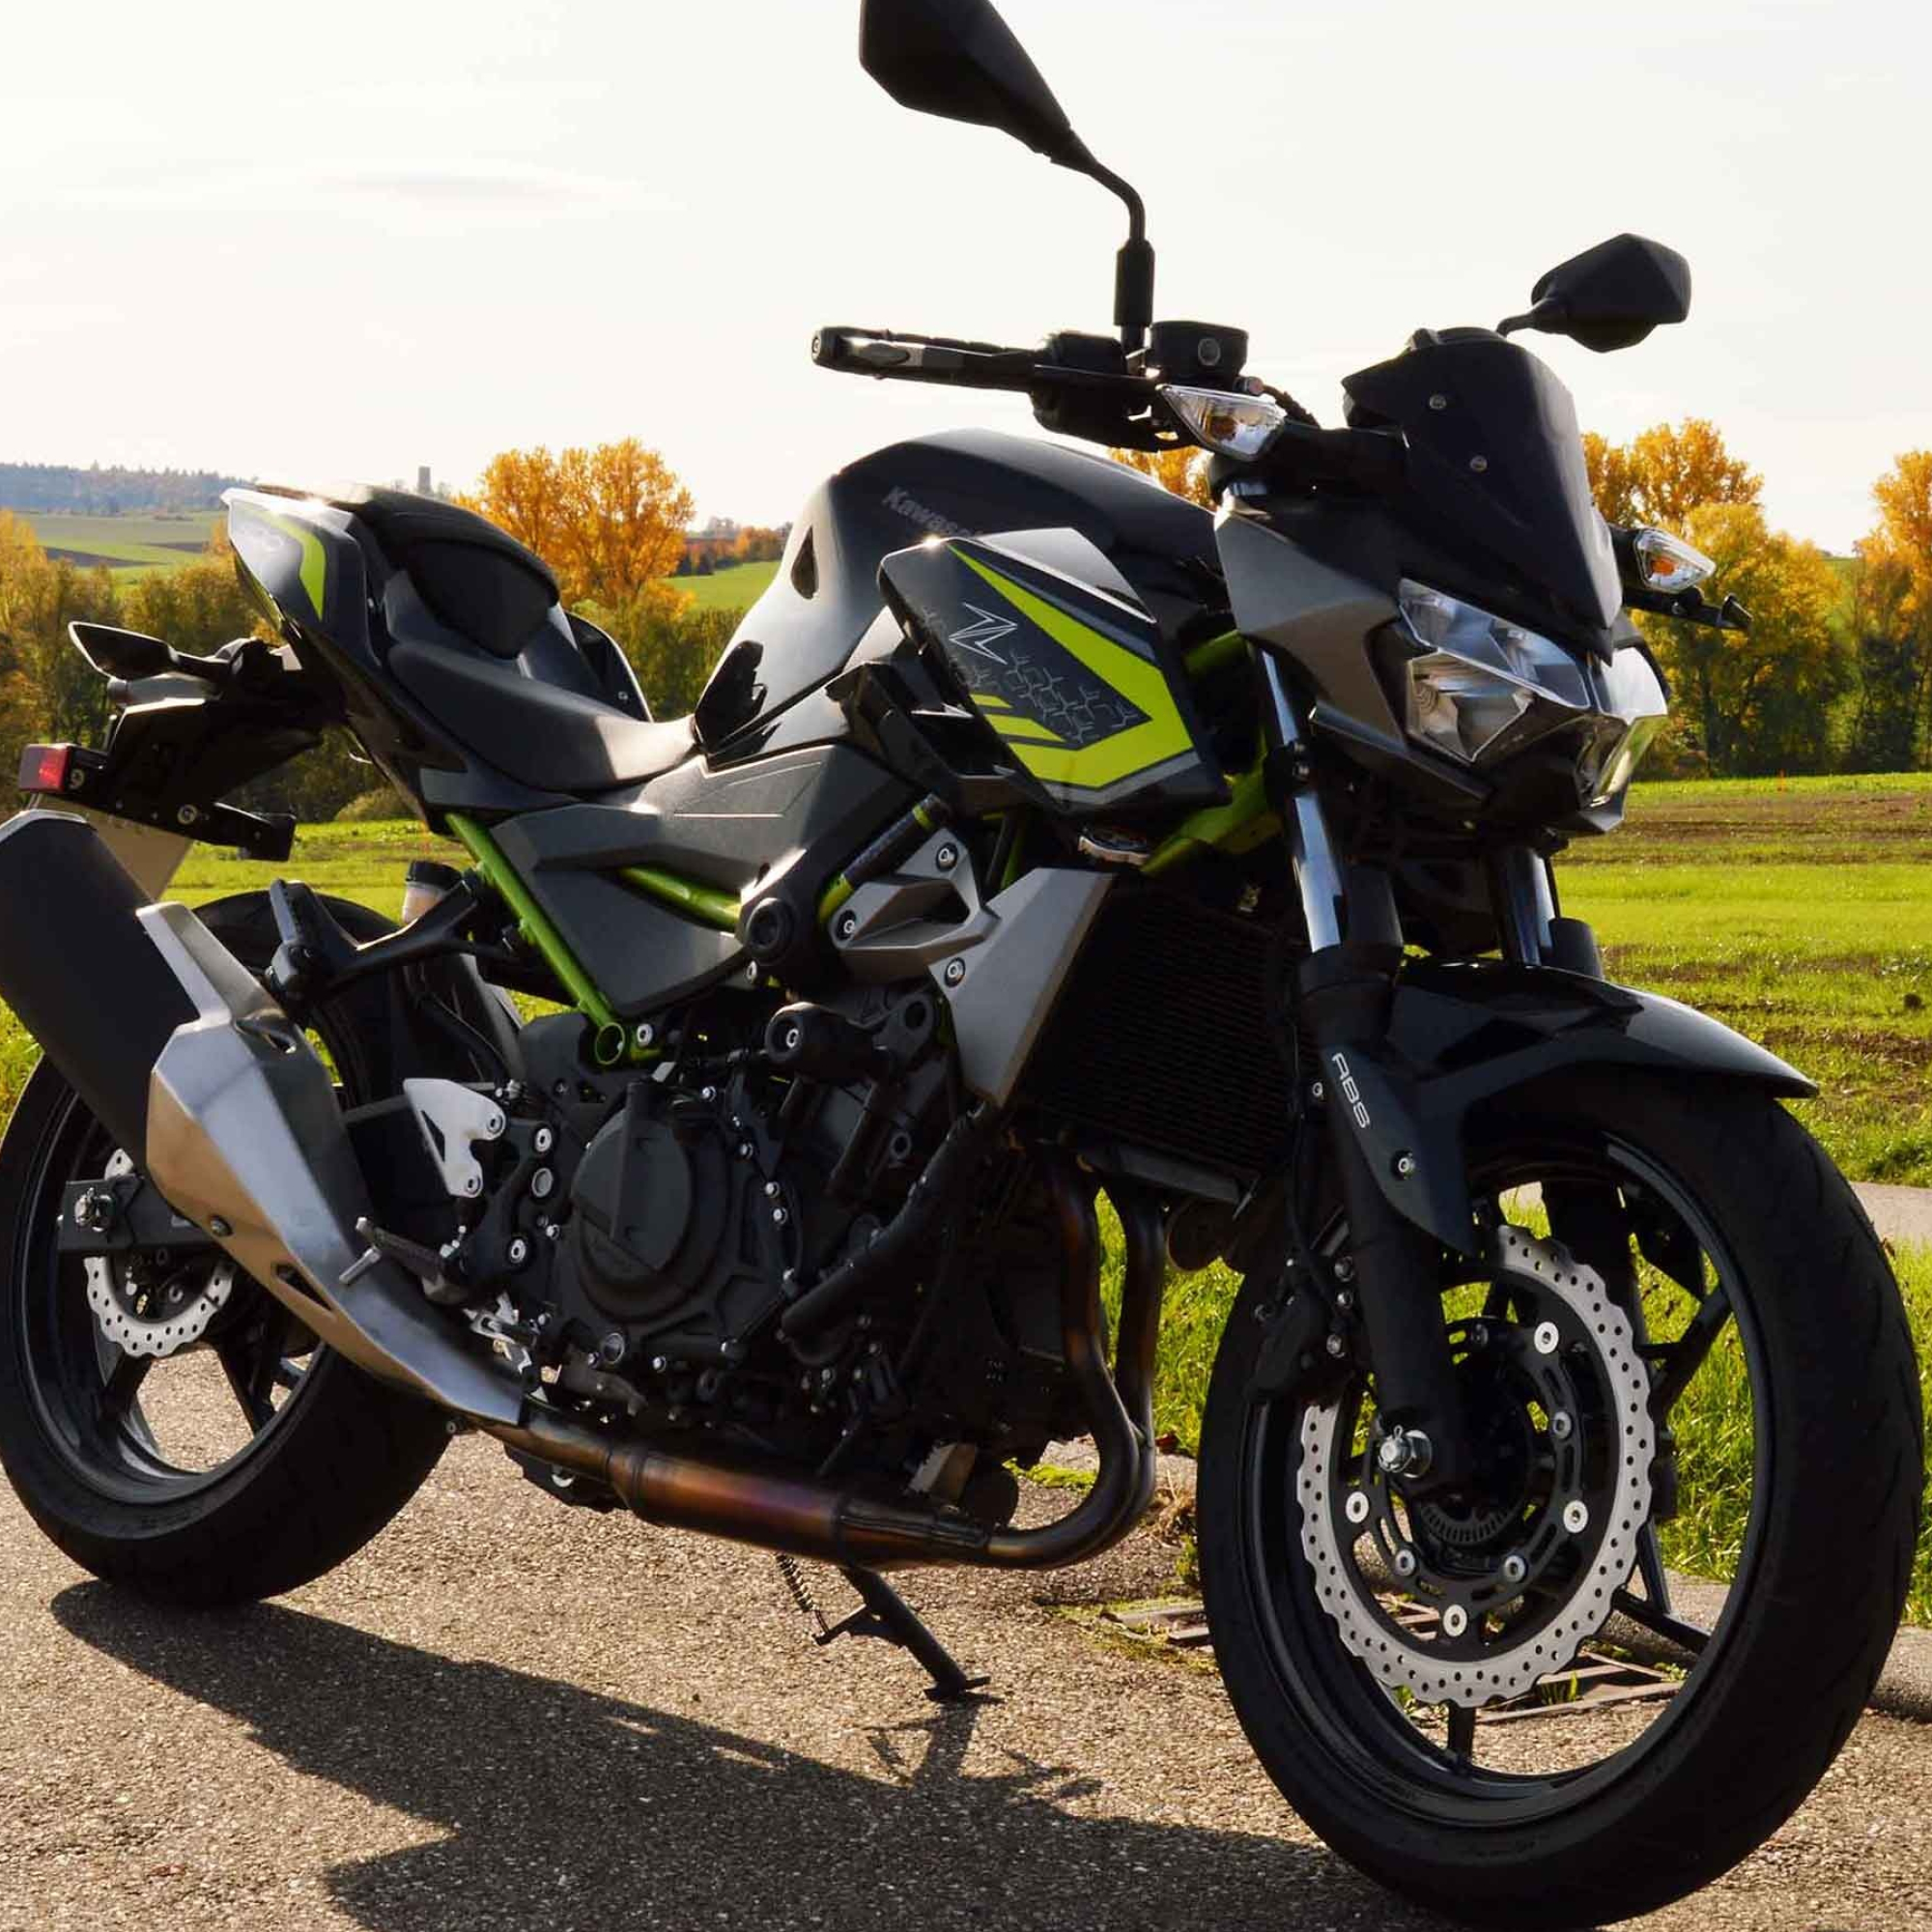 Kawasaki Z400, Iconic motorcycles, Pure motorcycling soul, Unwavering passion, 2000x2000 HD Handy